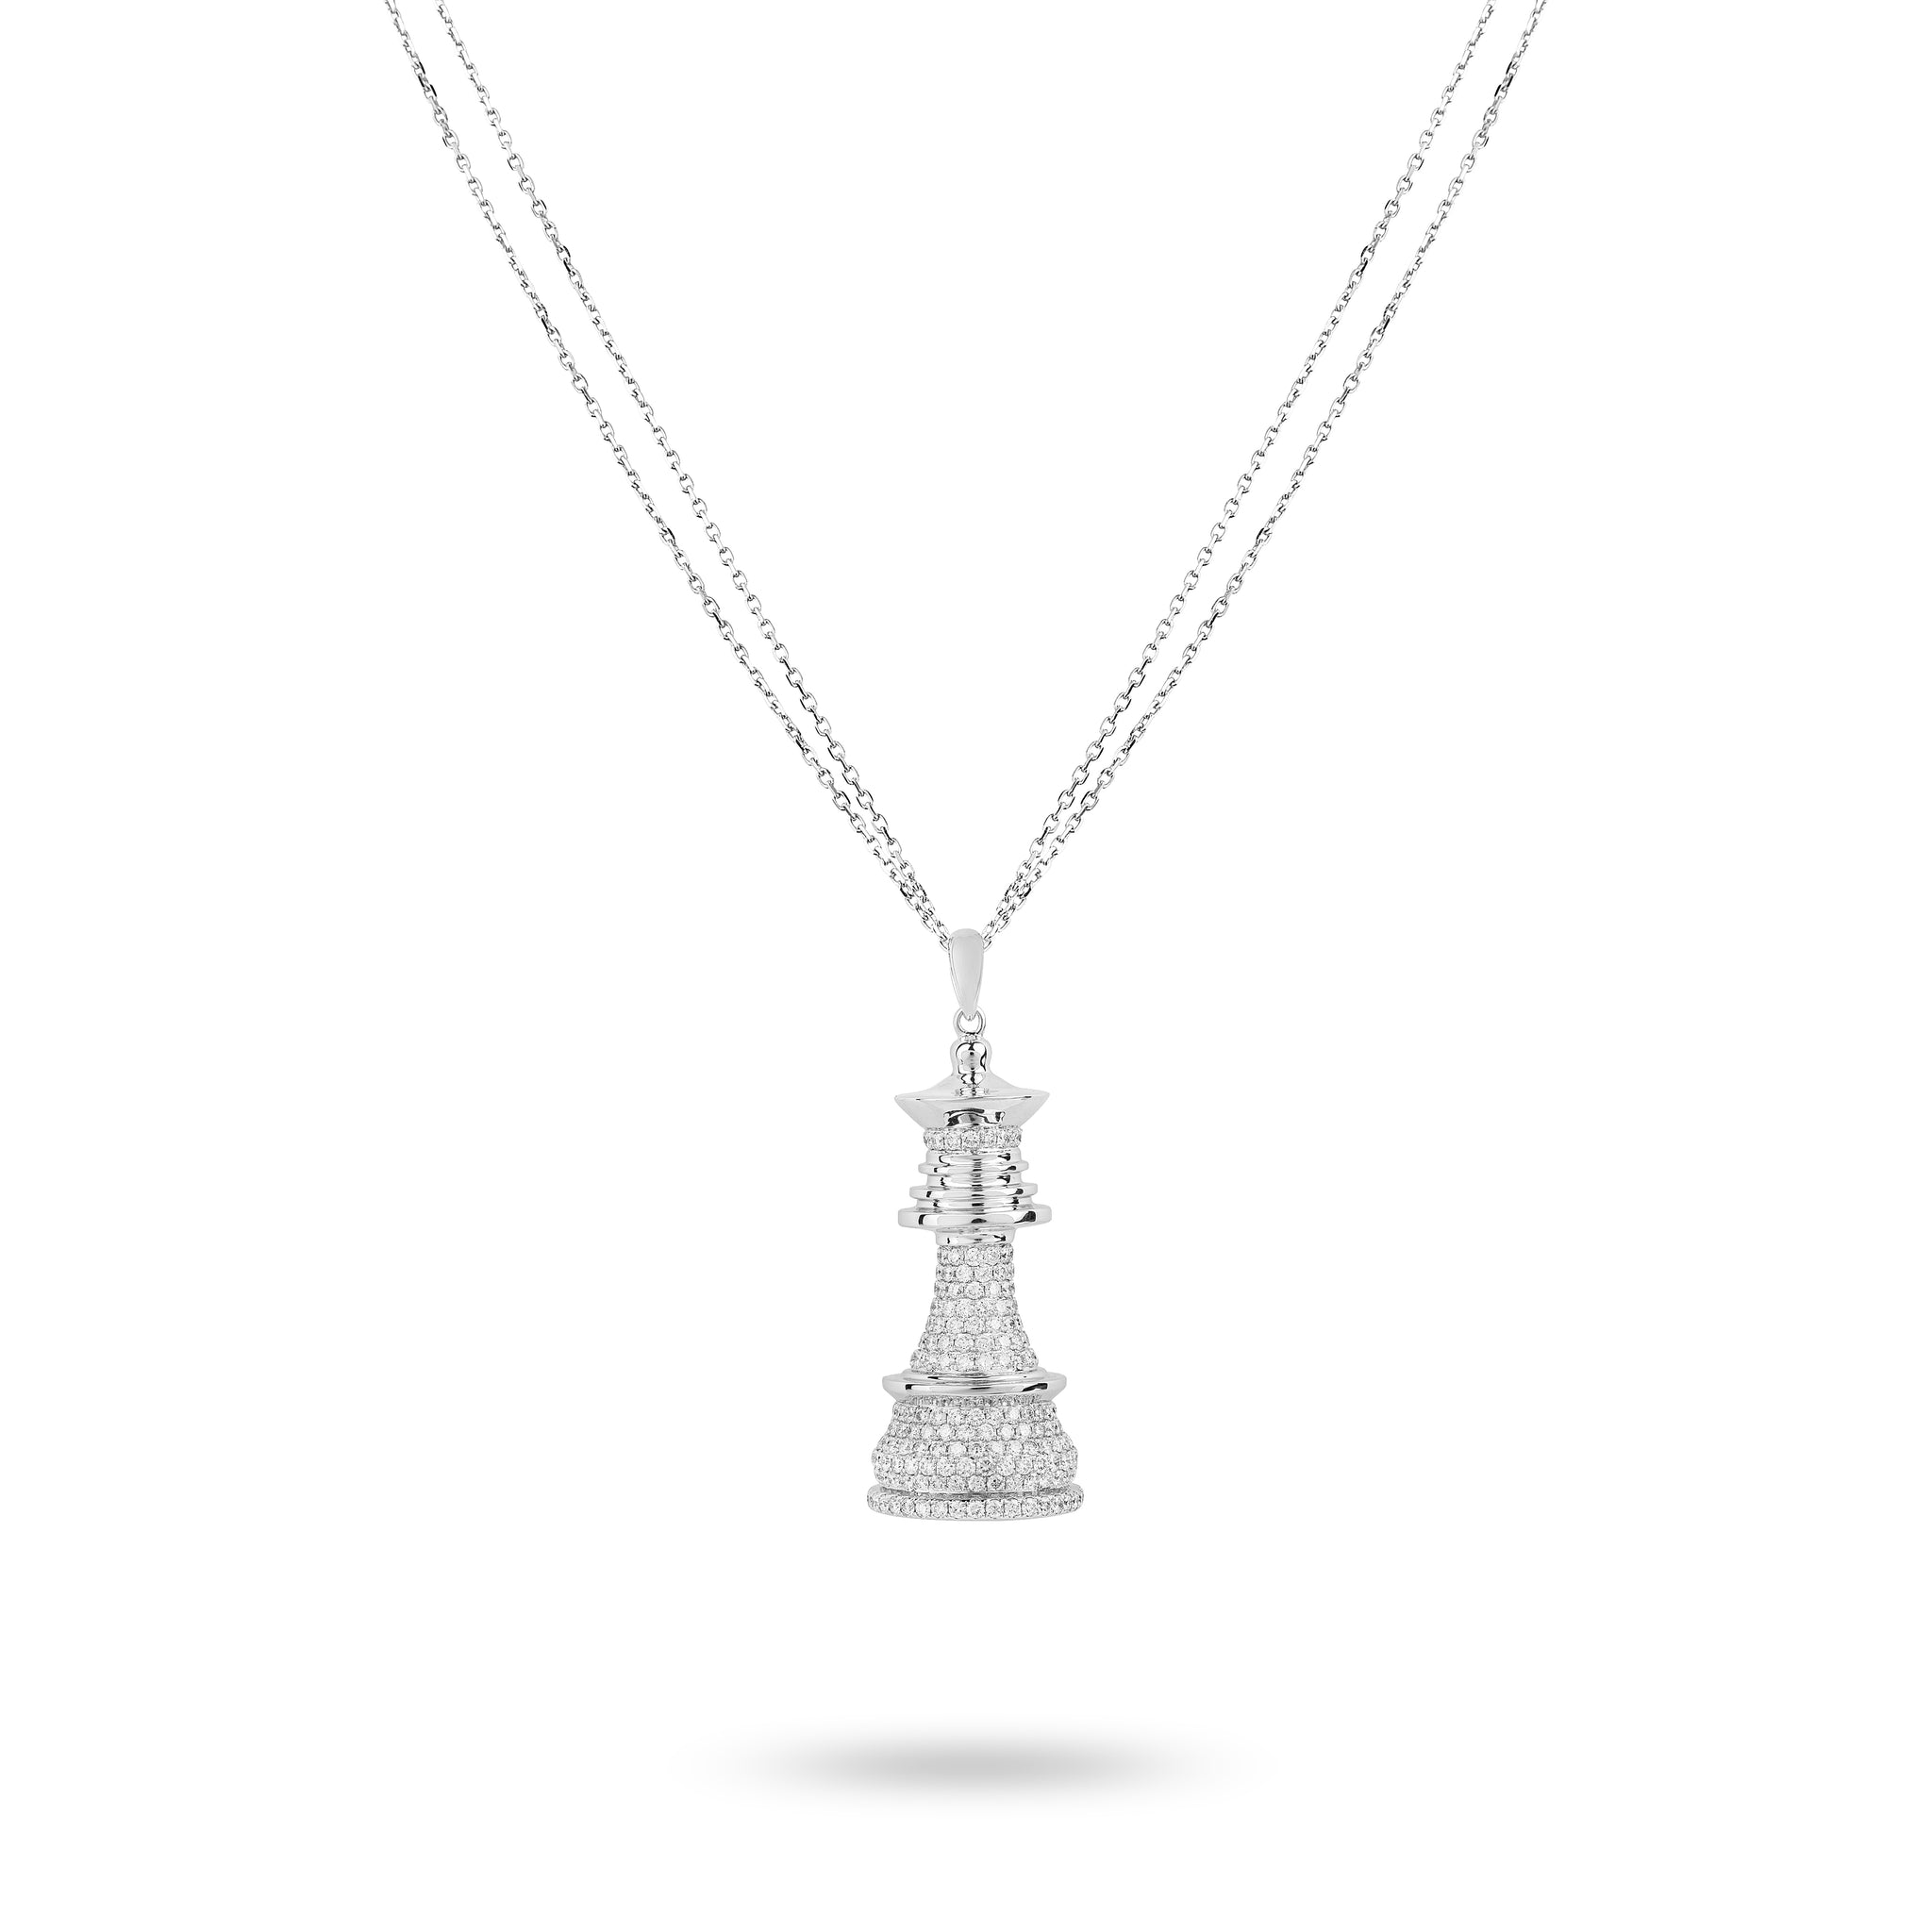 The Queen Power - White Gold White Diamonds Necklace - Ksenia Mirella Jewellery 